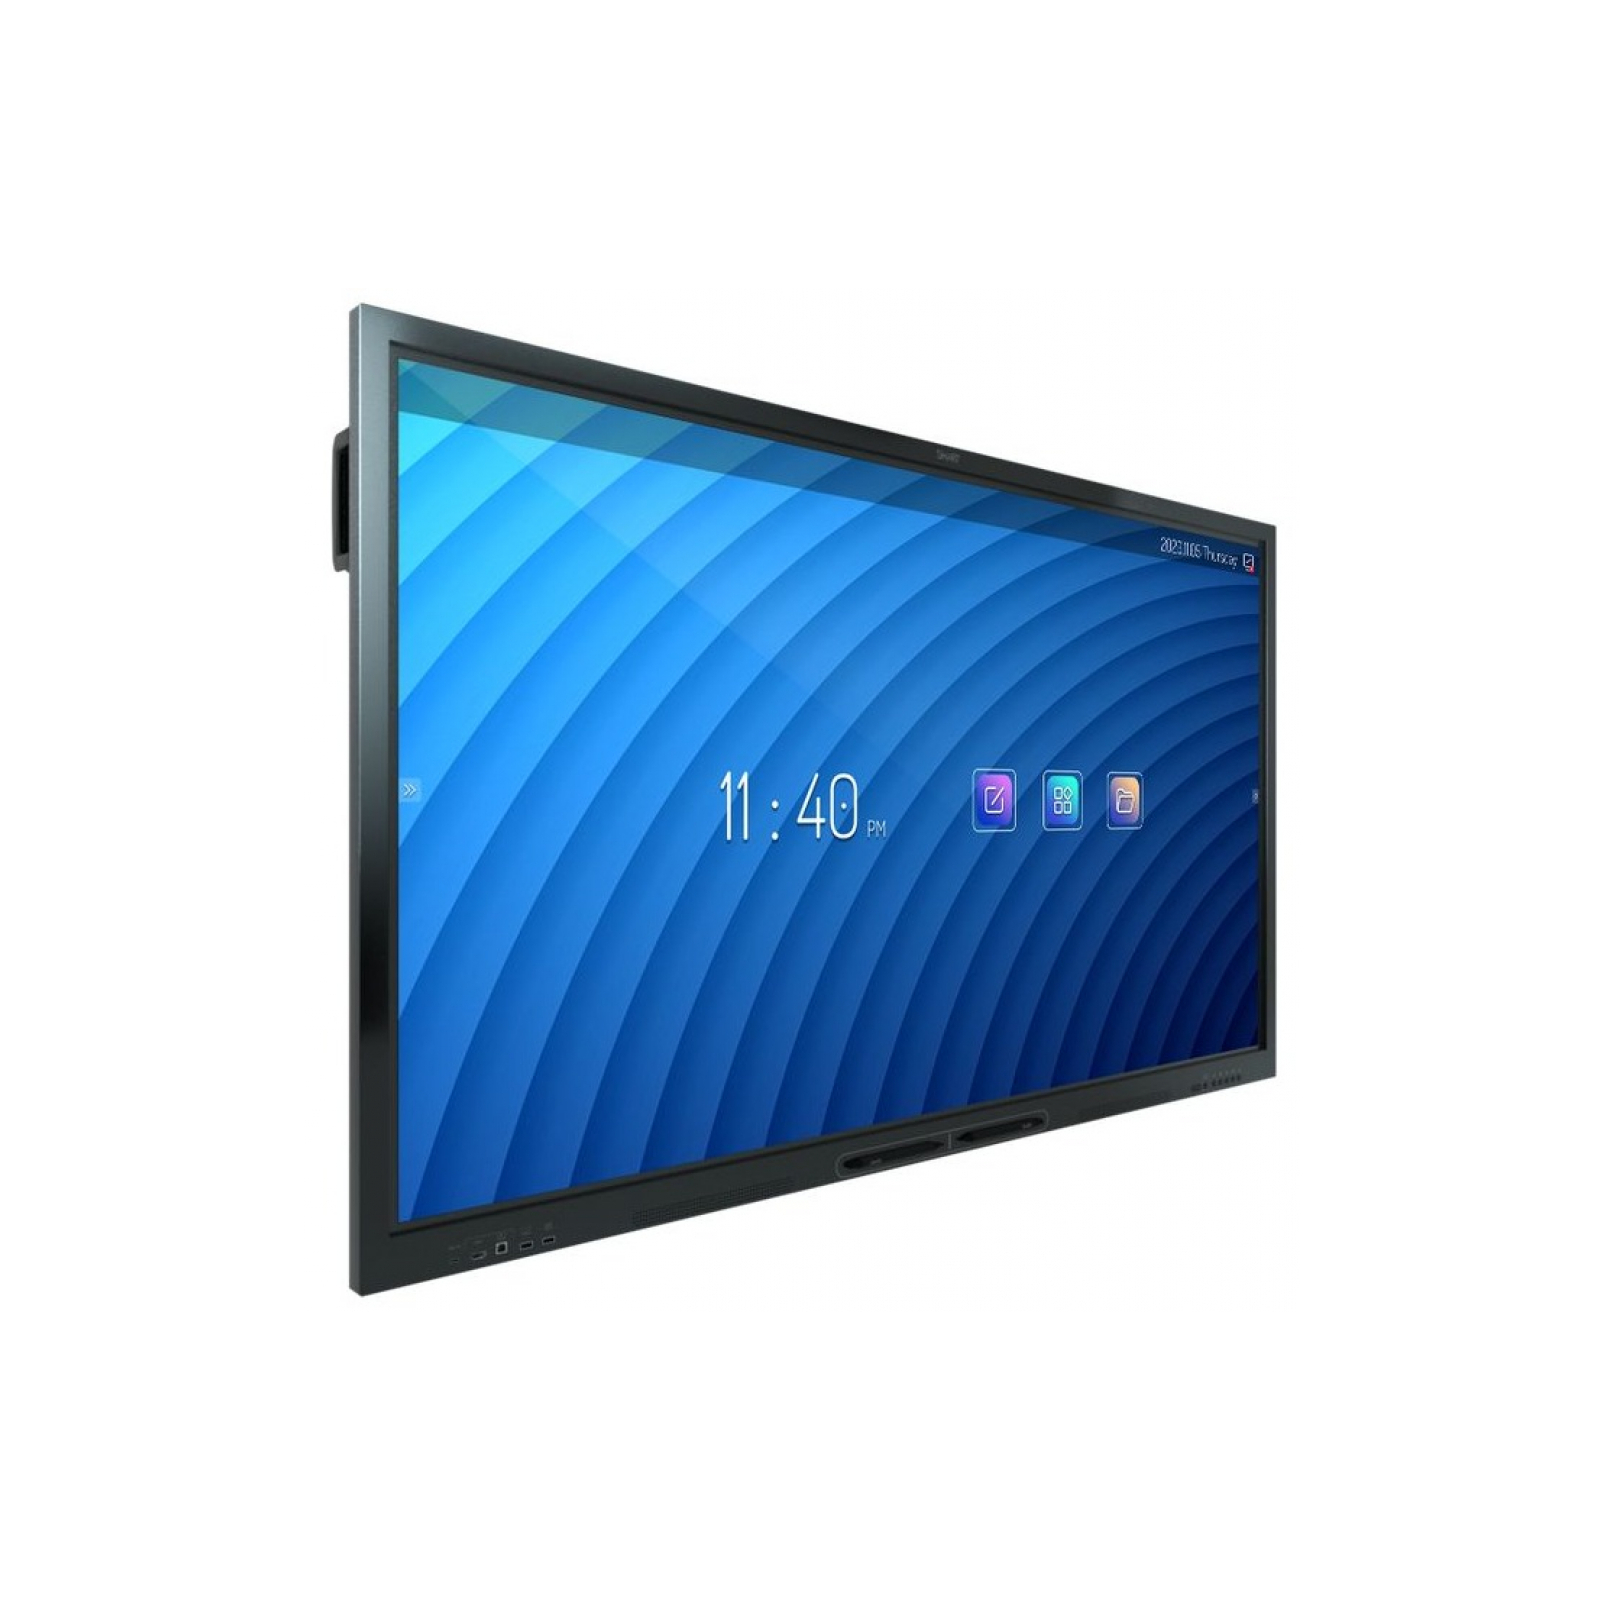 LCD панель Smart SBID-GX165-V2 изображение 2